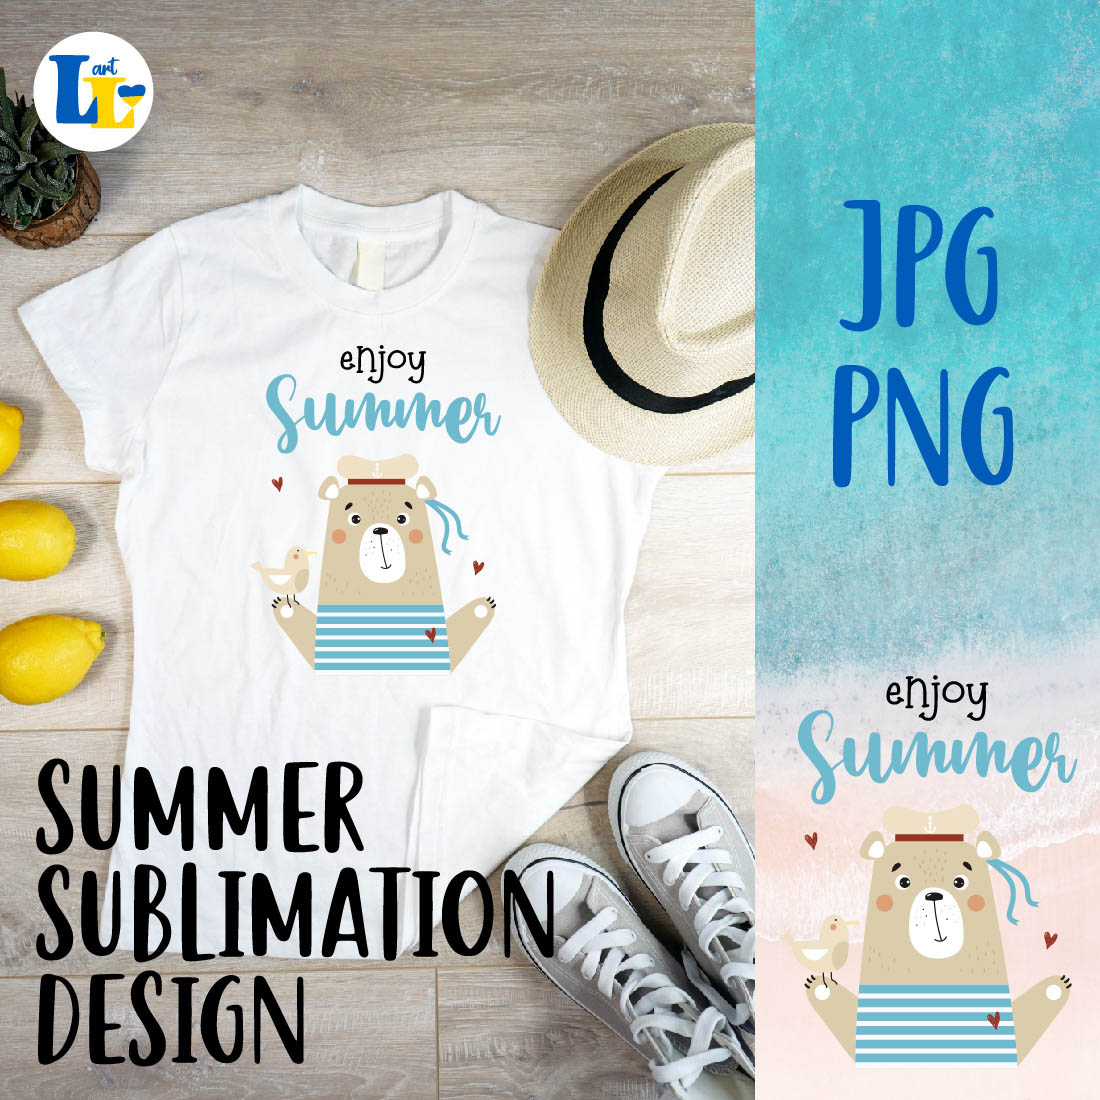 Cute Bear Sailor Summer Sublimation Design Cover Image.